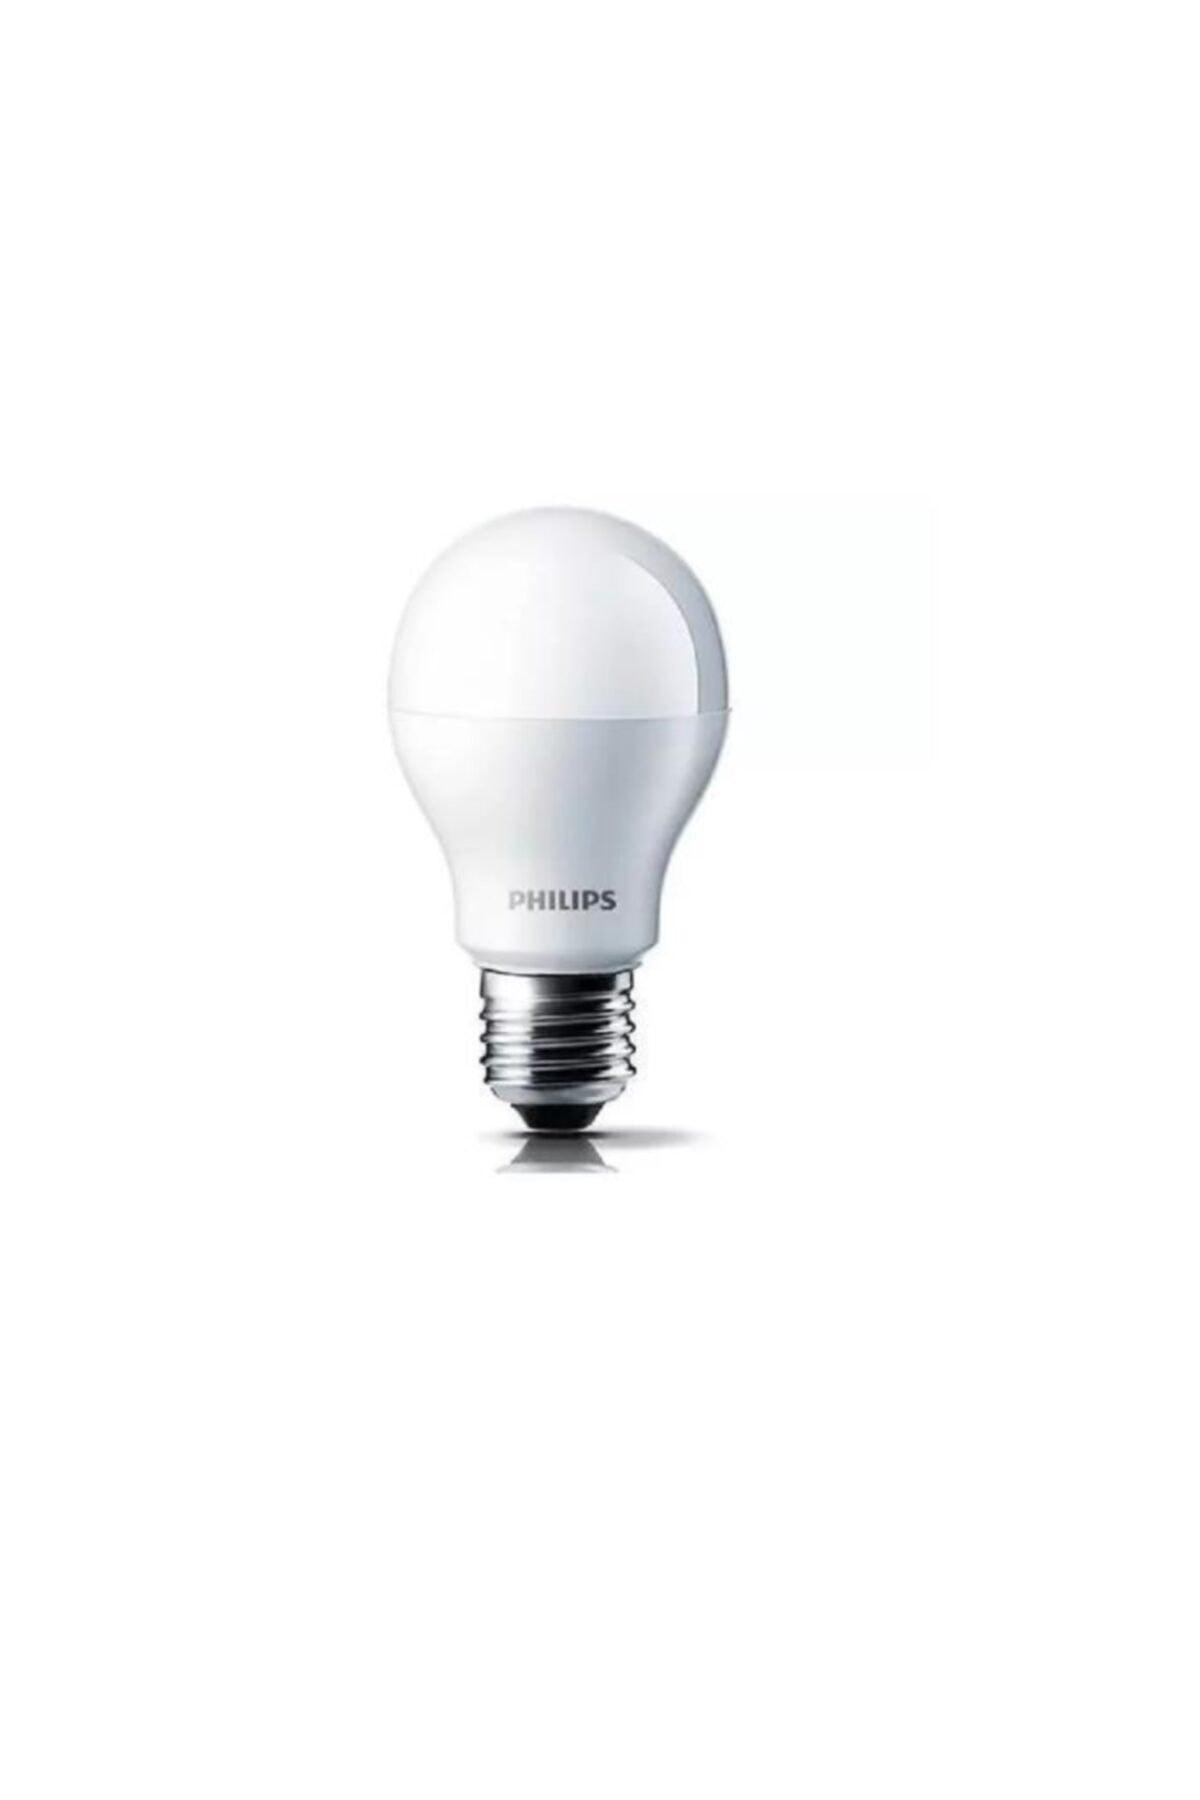 8w Essential Led Bulb E27 Socket Yellow Light 36